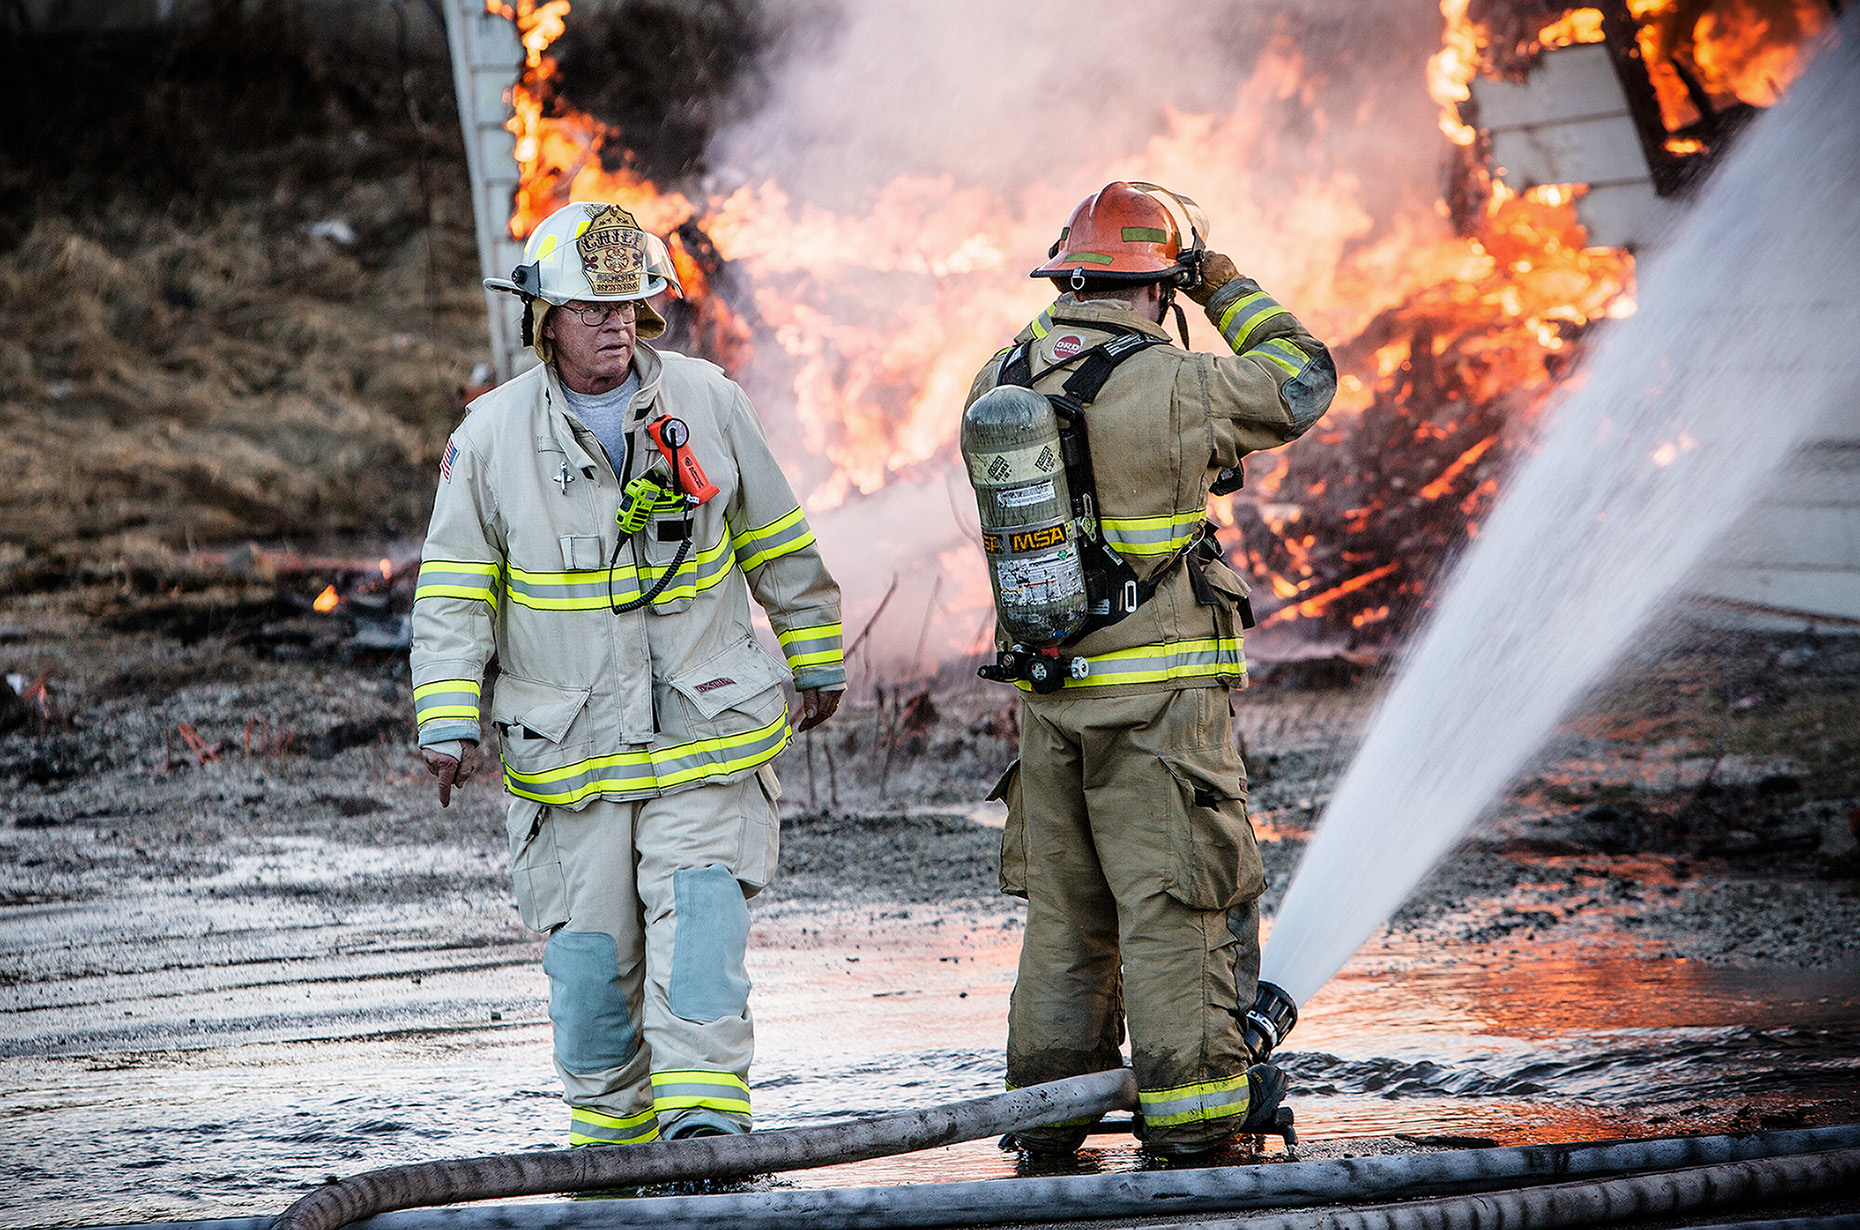 John Sibilski Photography | Blue collar Illinois FIGHTING FIRE 9